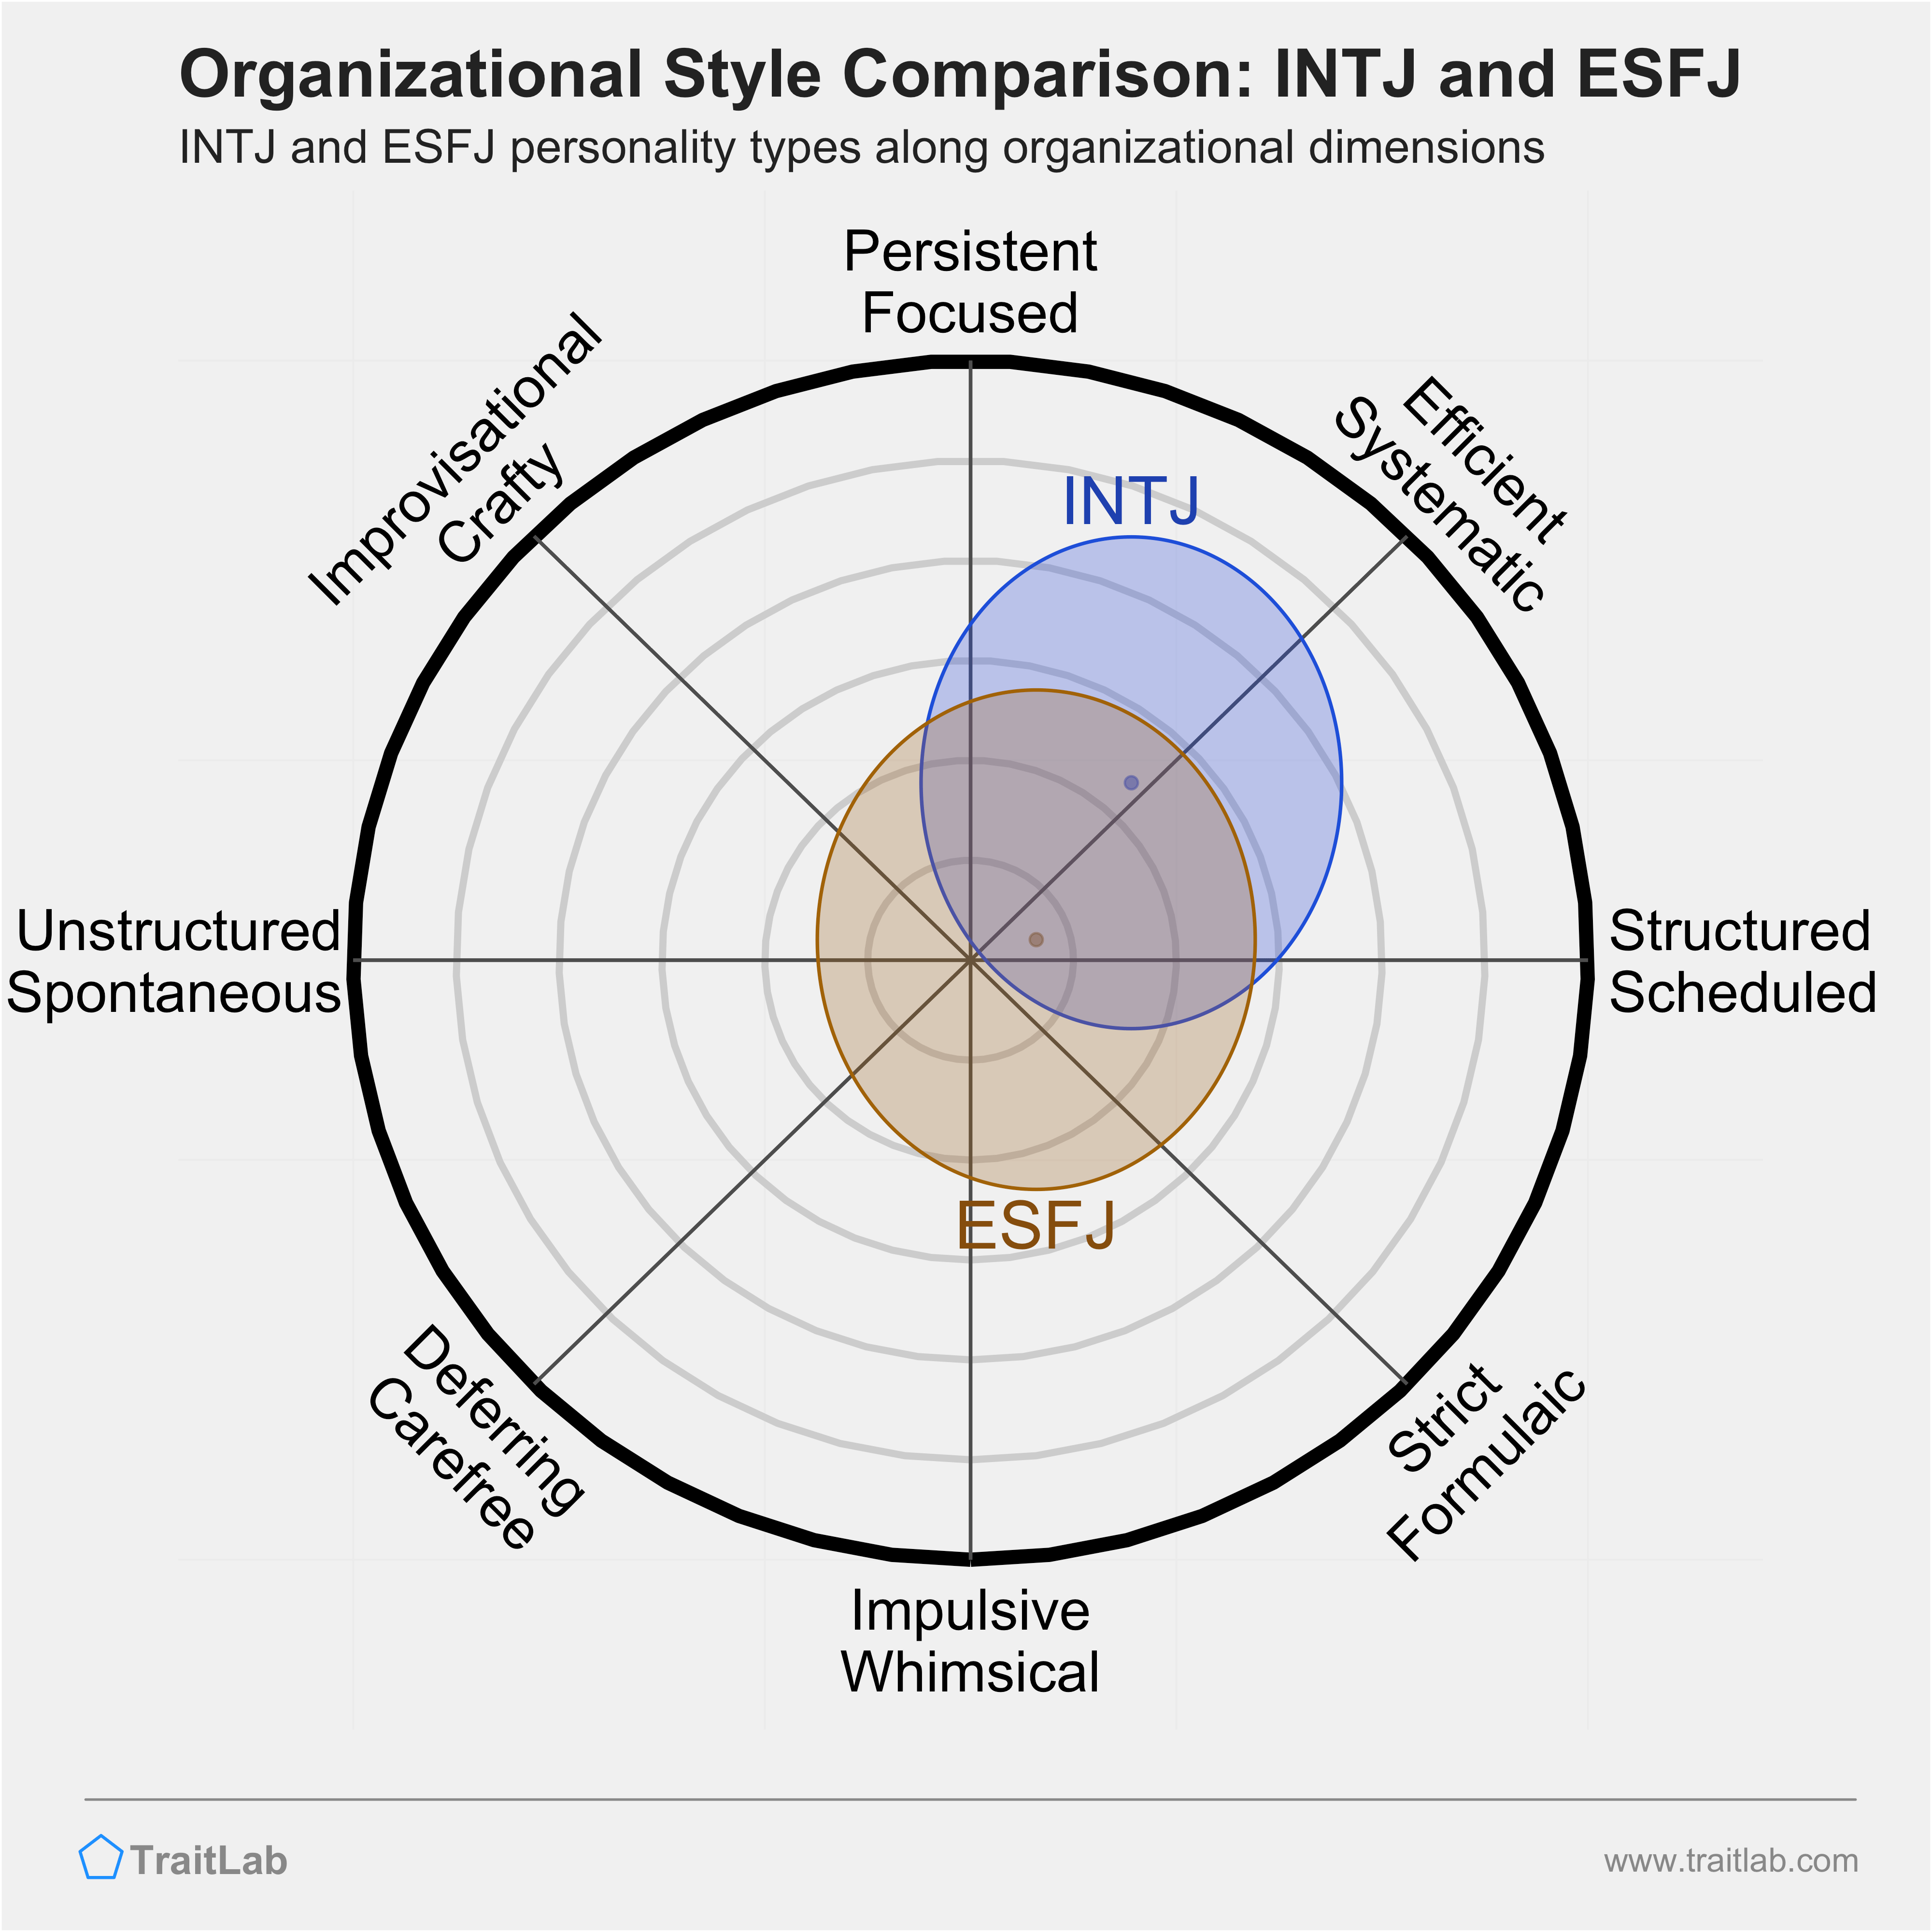 INTJ and ESFJ comparison across organizational dimensions